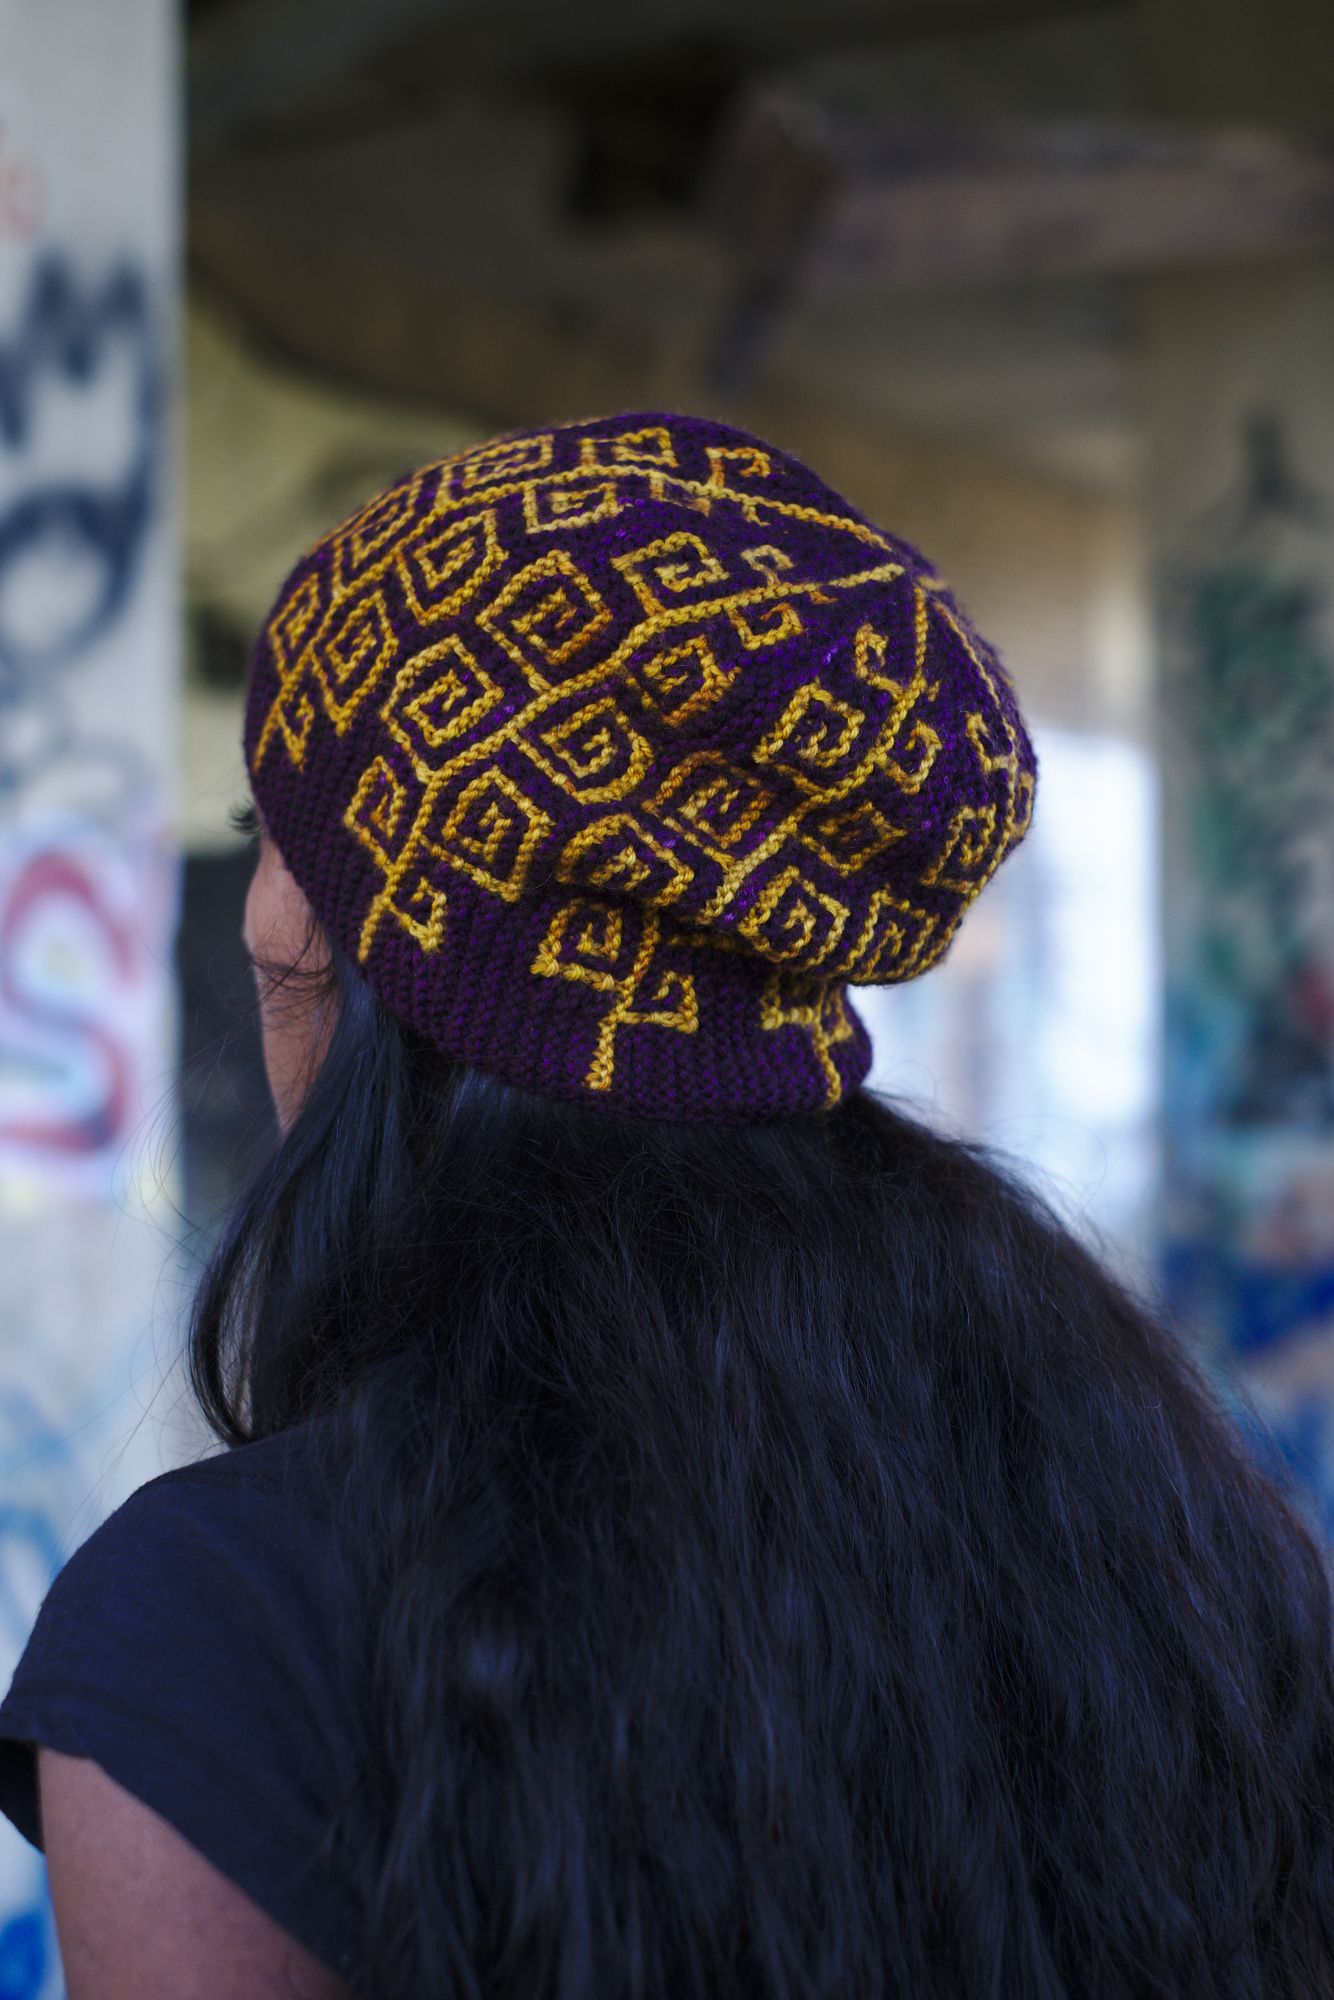 Uprising sideways knit mosaic hat knitting pattern for dk weight yarn